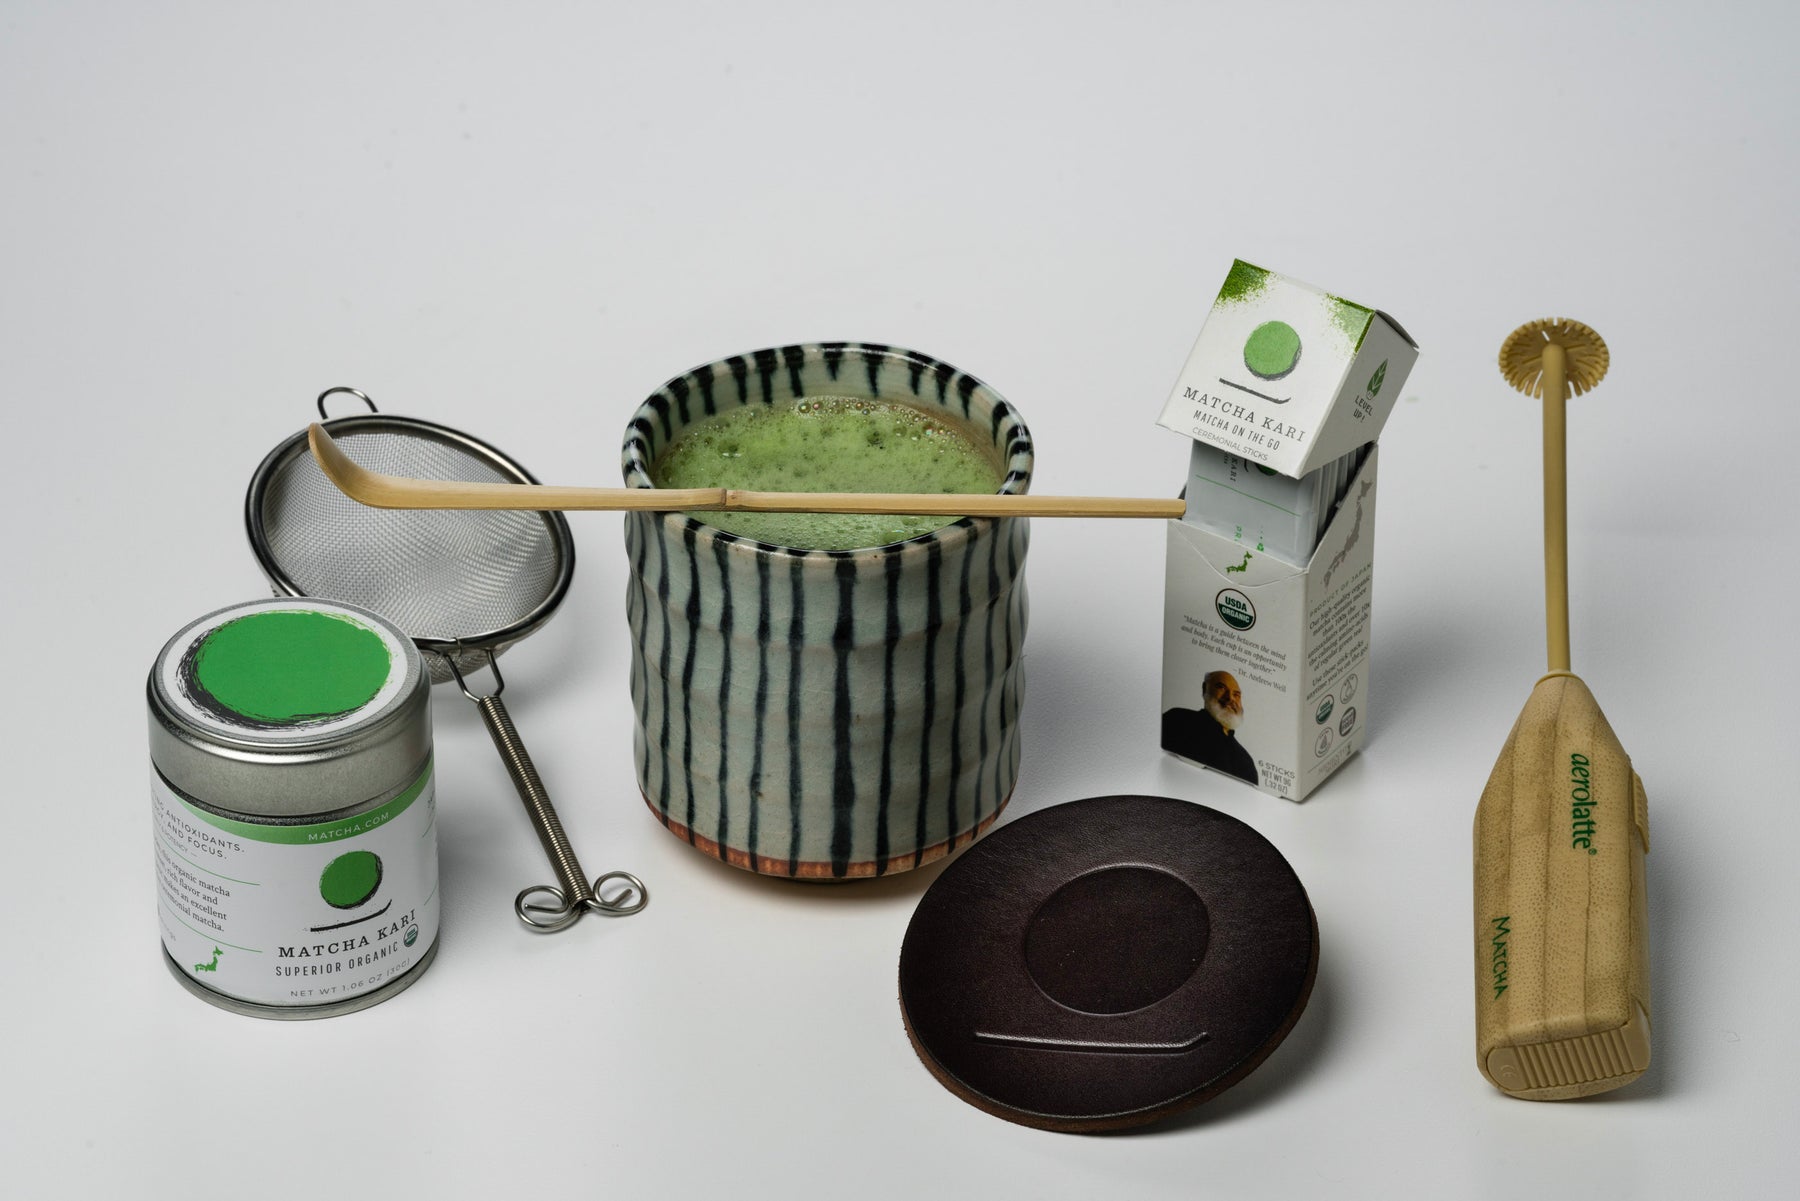 Organic Ceremonial Matcha Tea Set